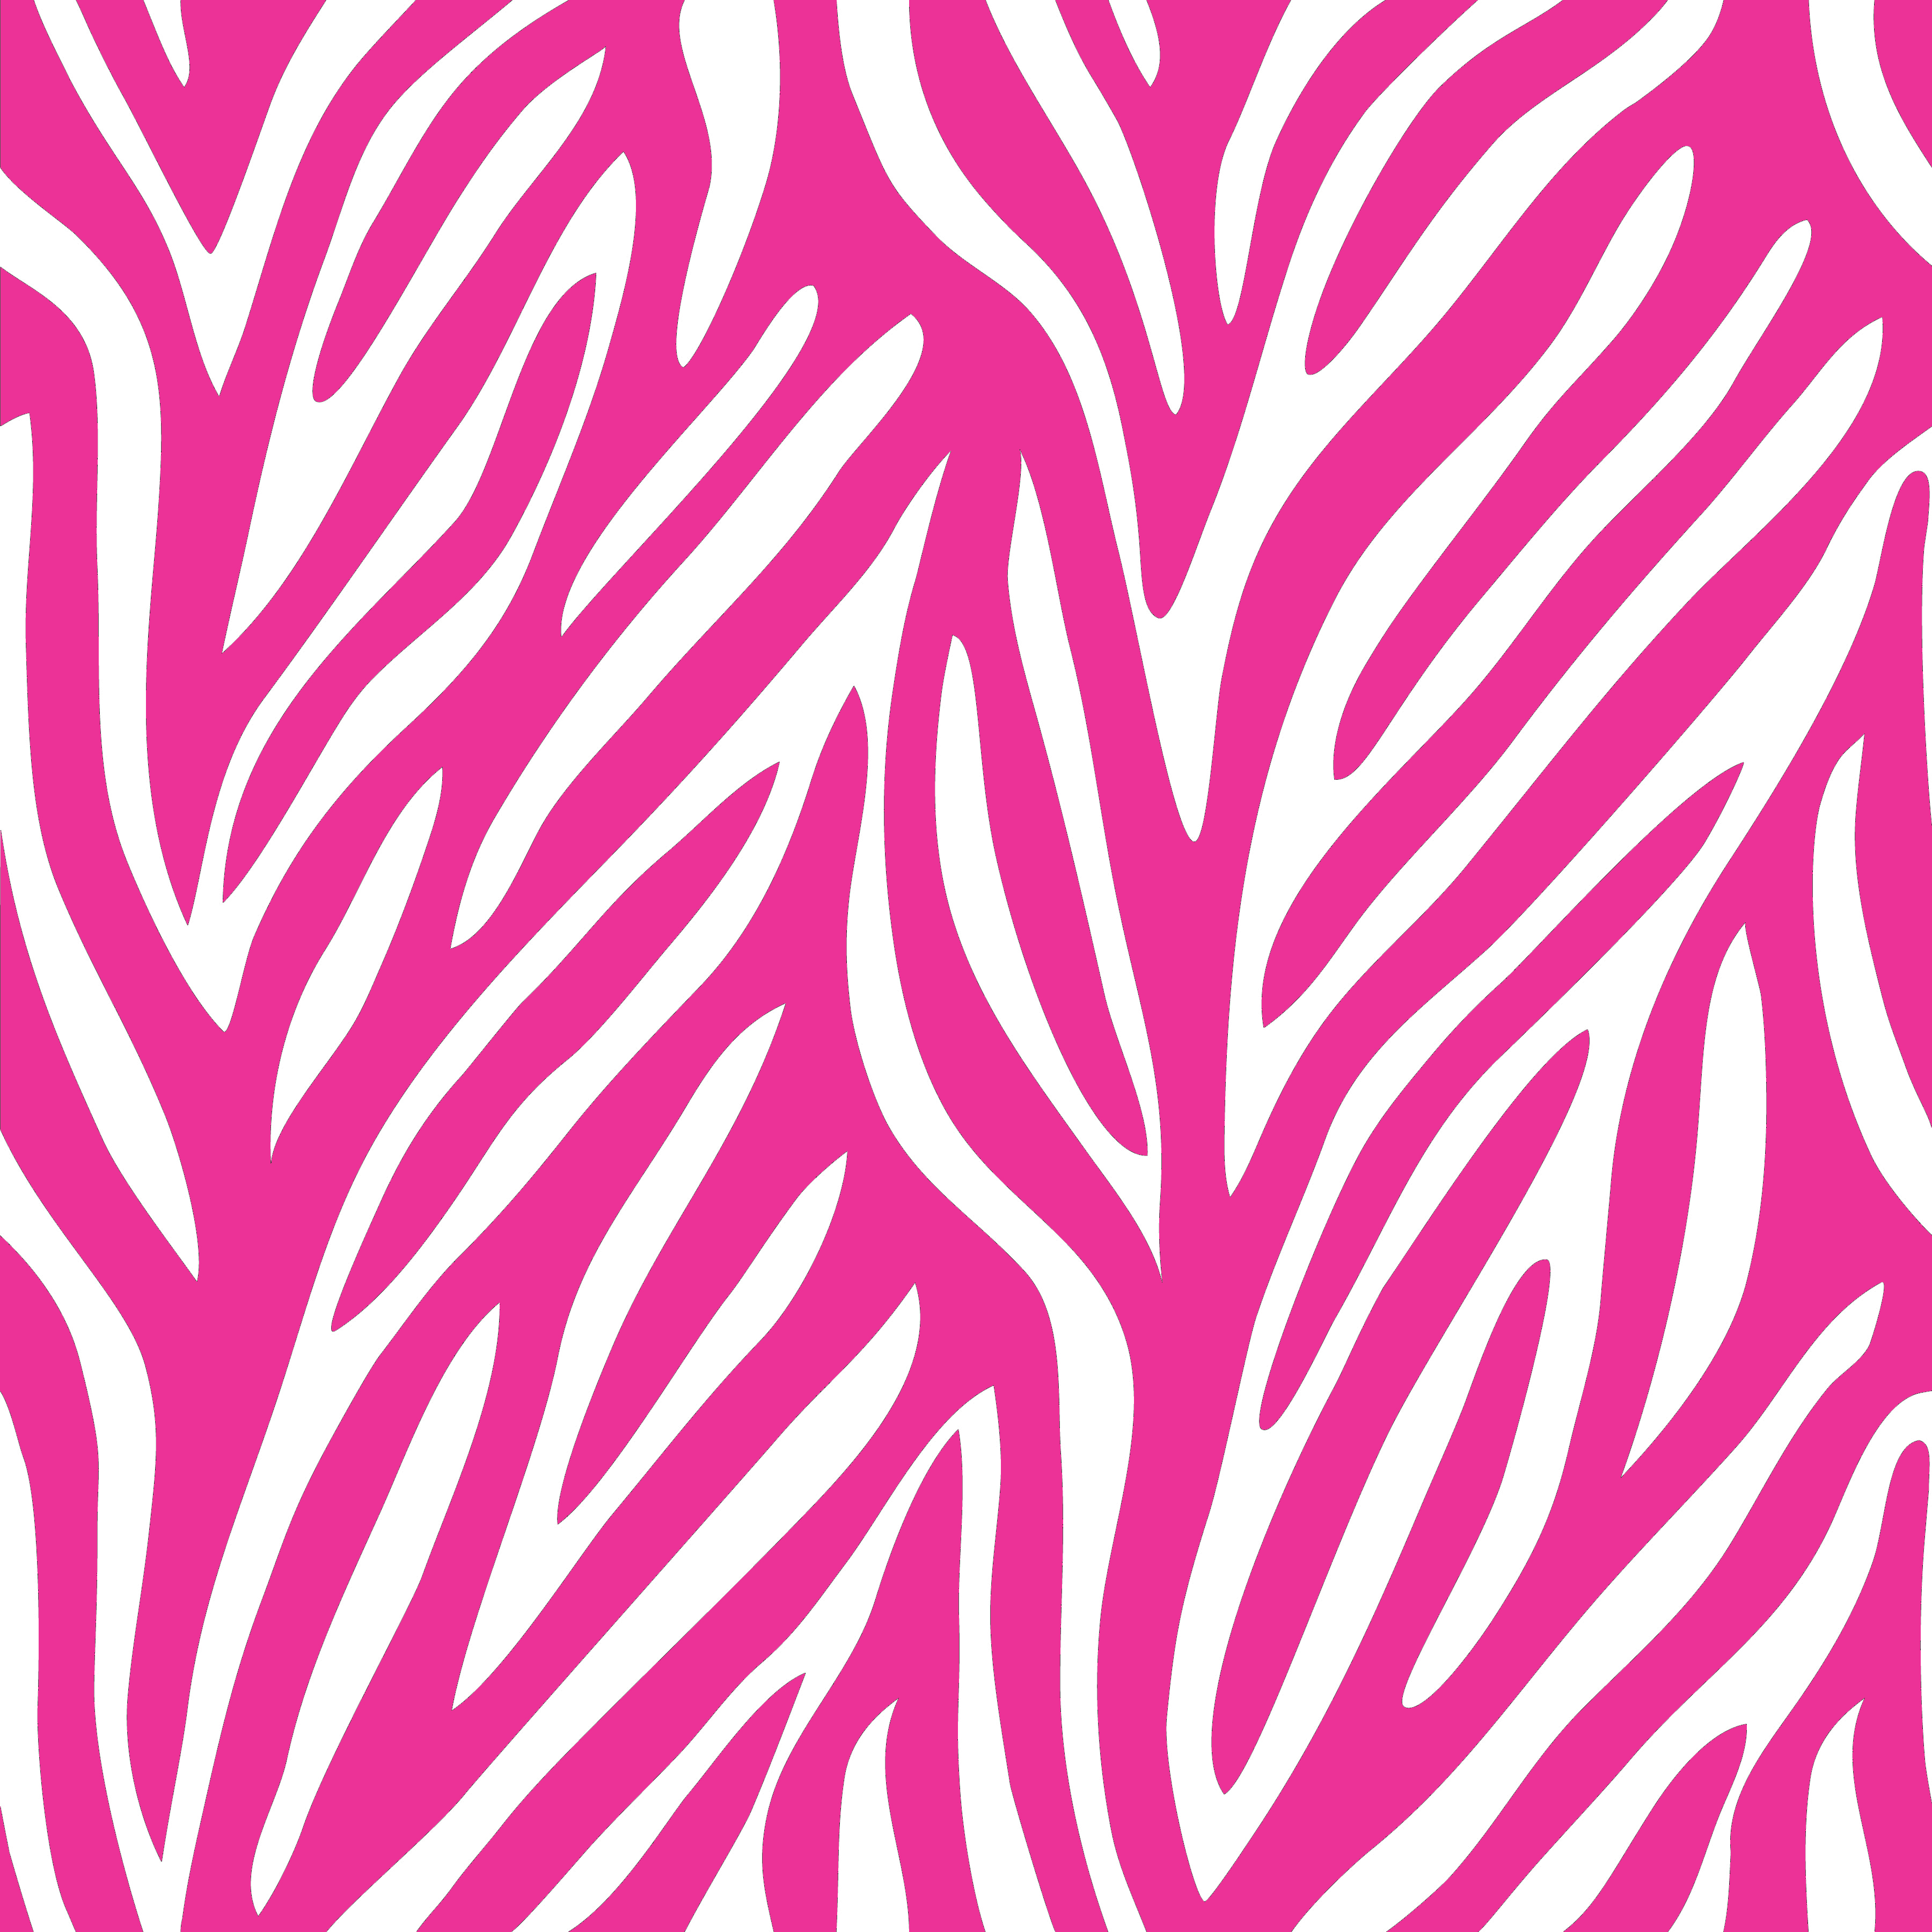 Pink Zebra Print Wallpaper High Definition Jpg